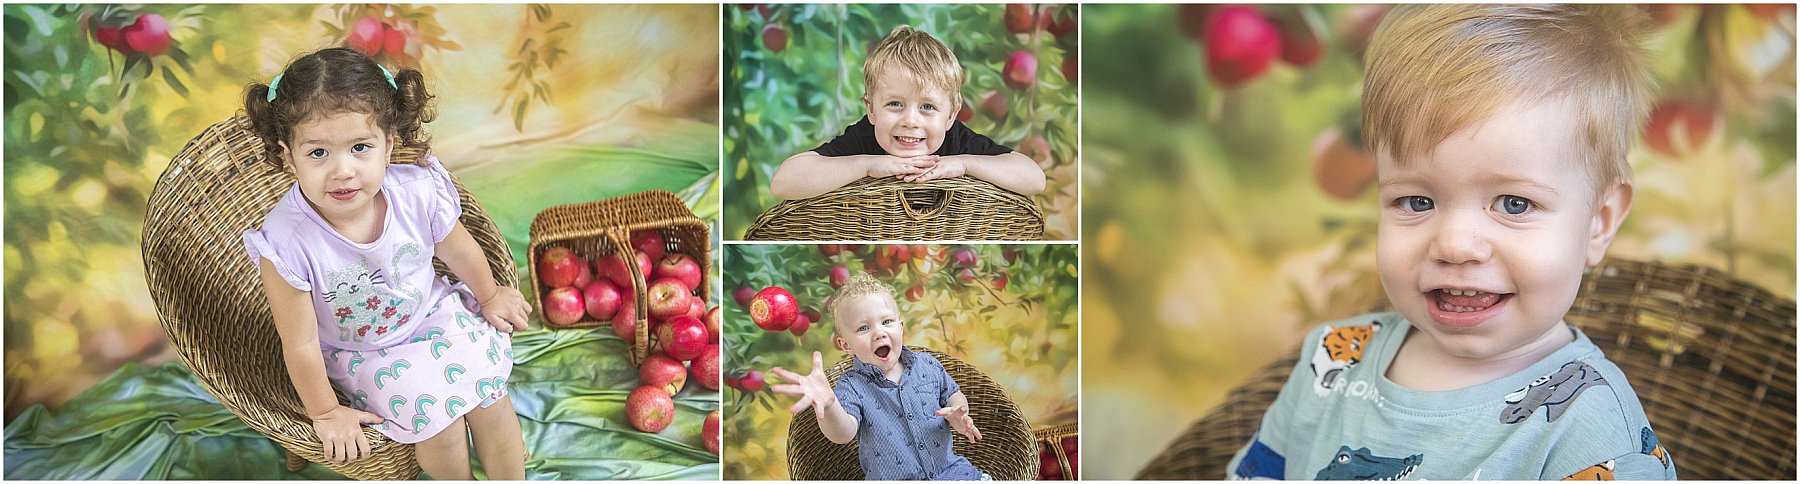 brisbane daycare photographer best reasons to choose school portrait art